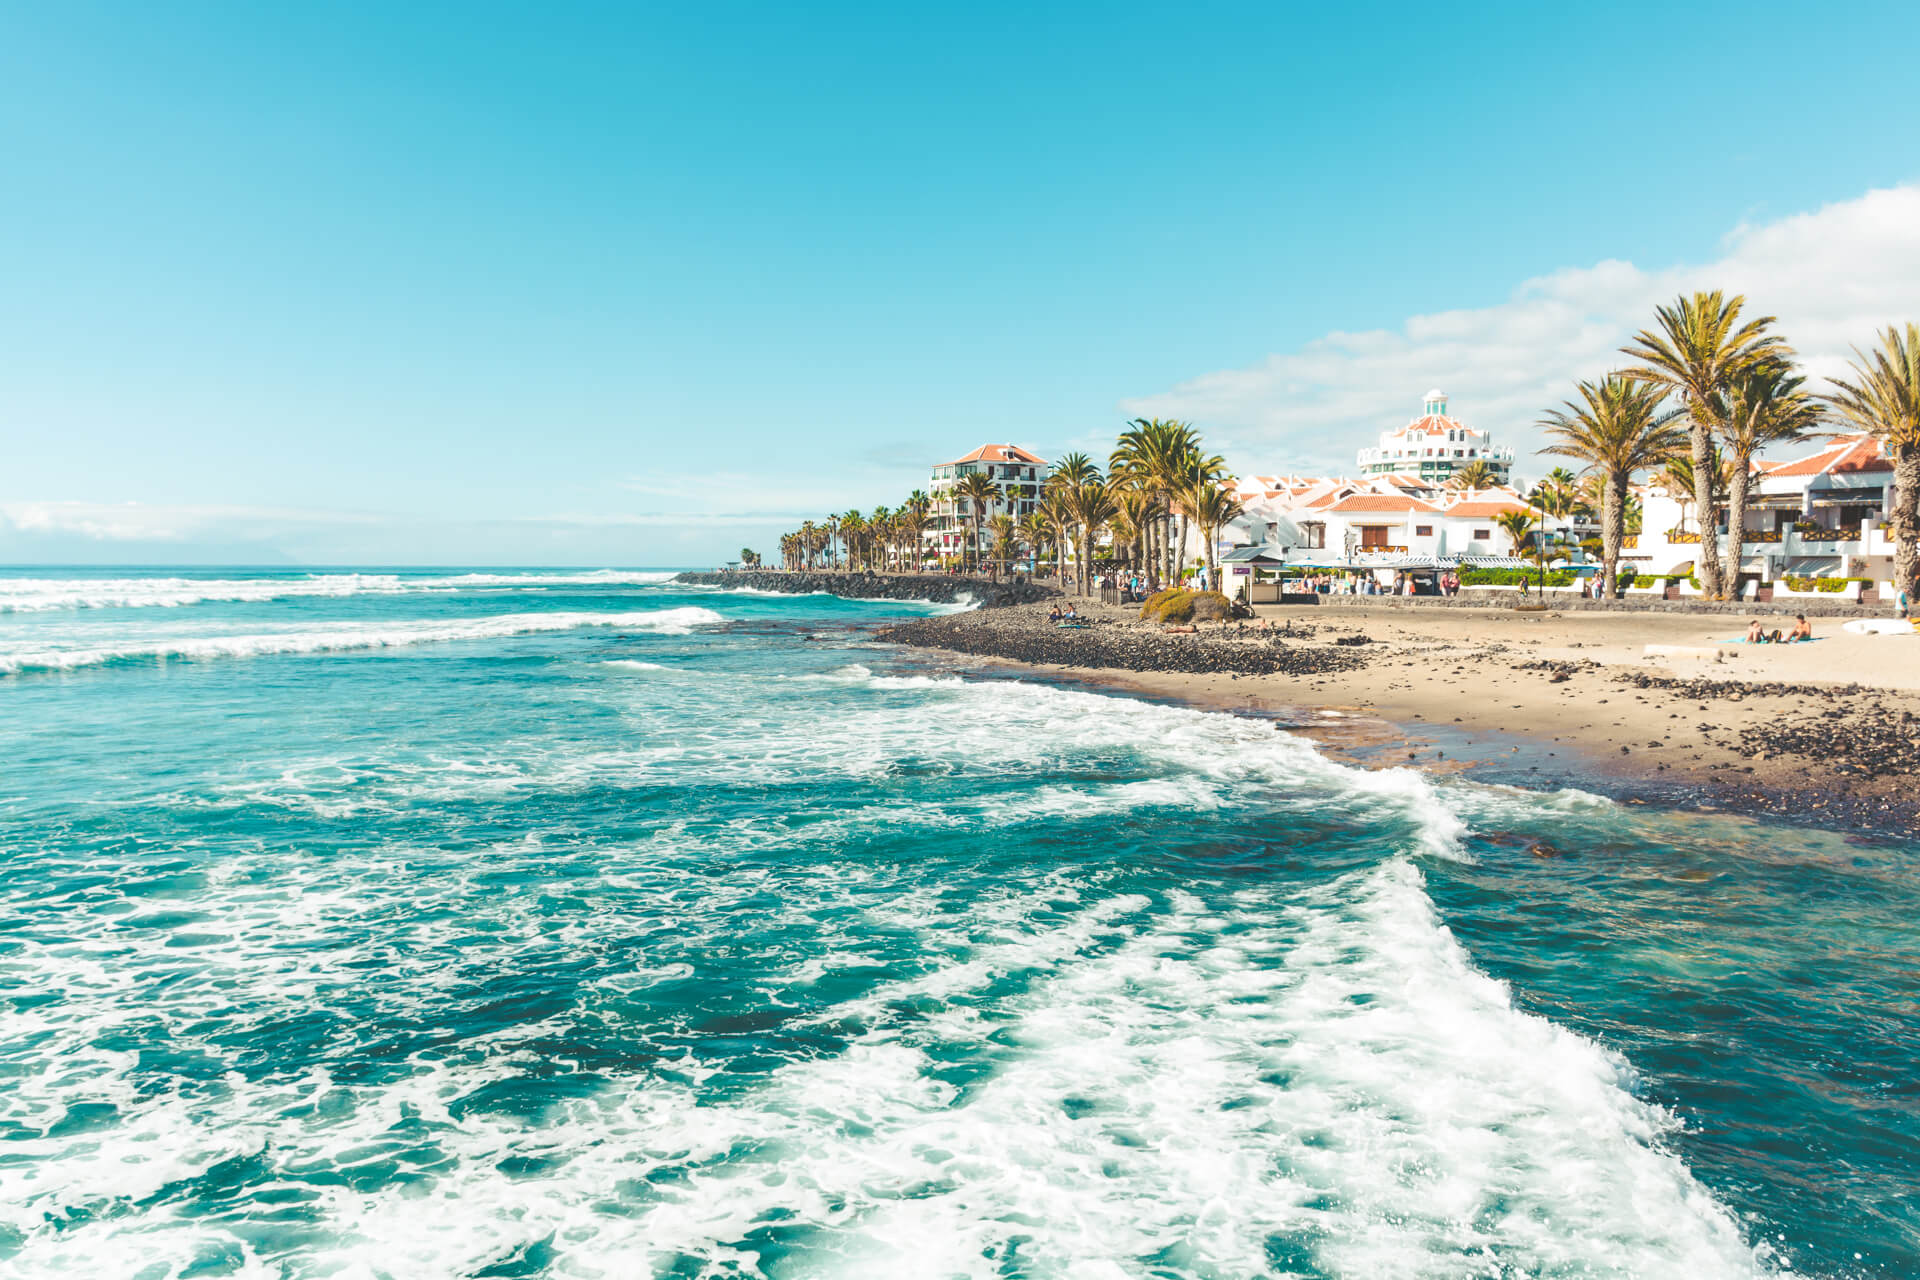 View of the coast and beach in Playa de las Americas,  